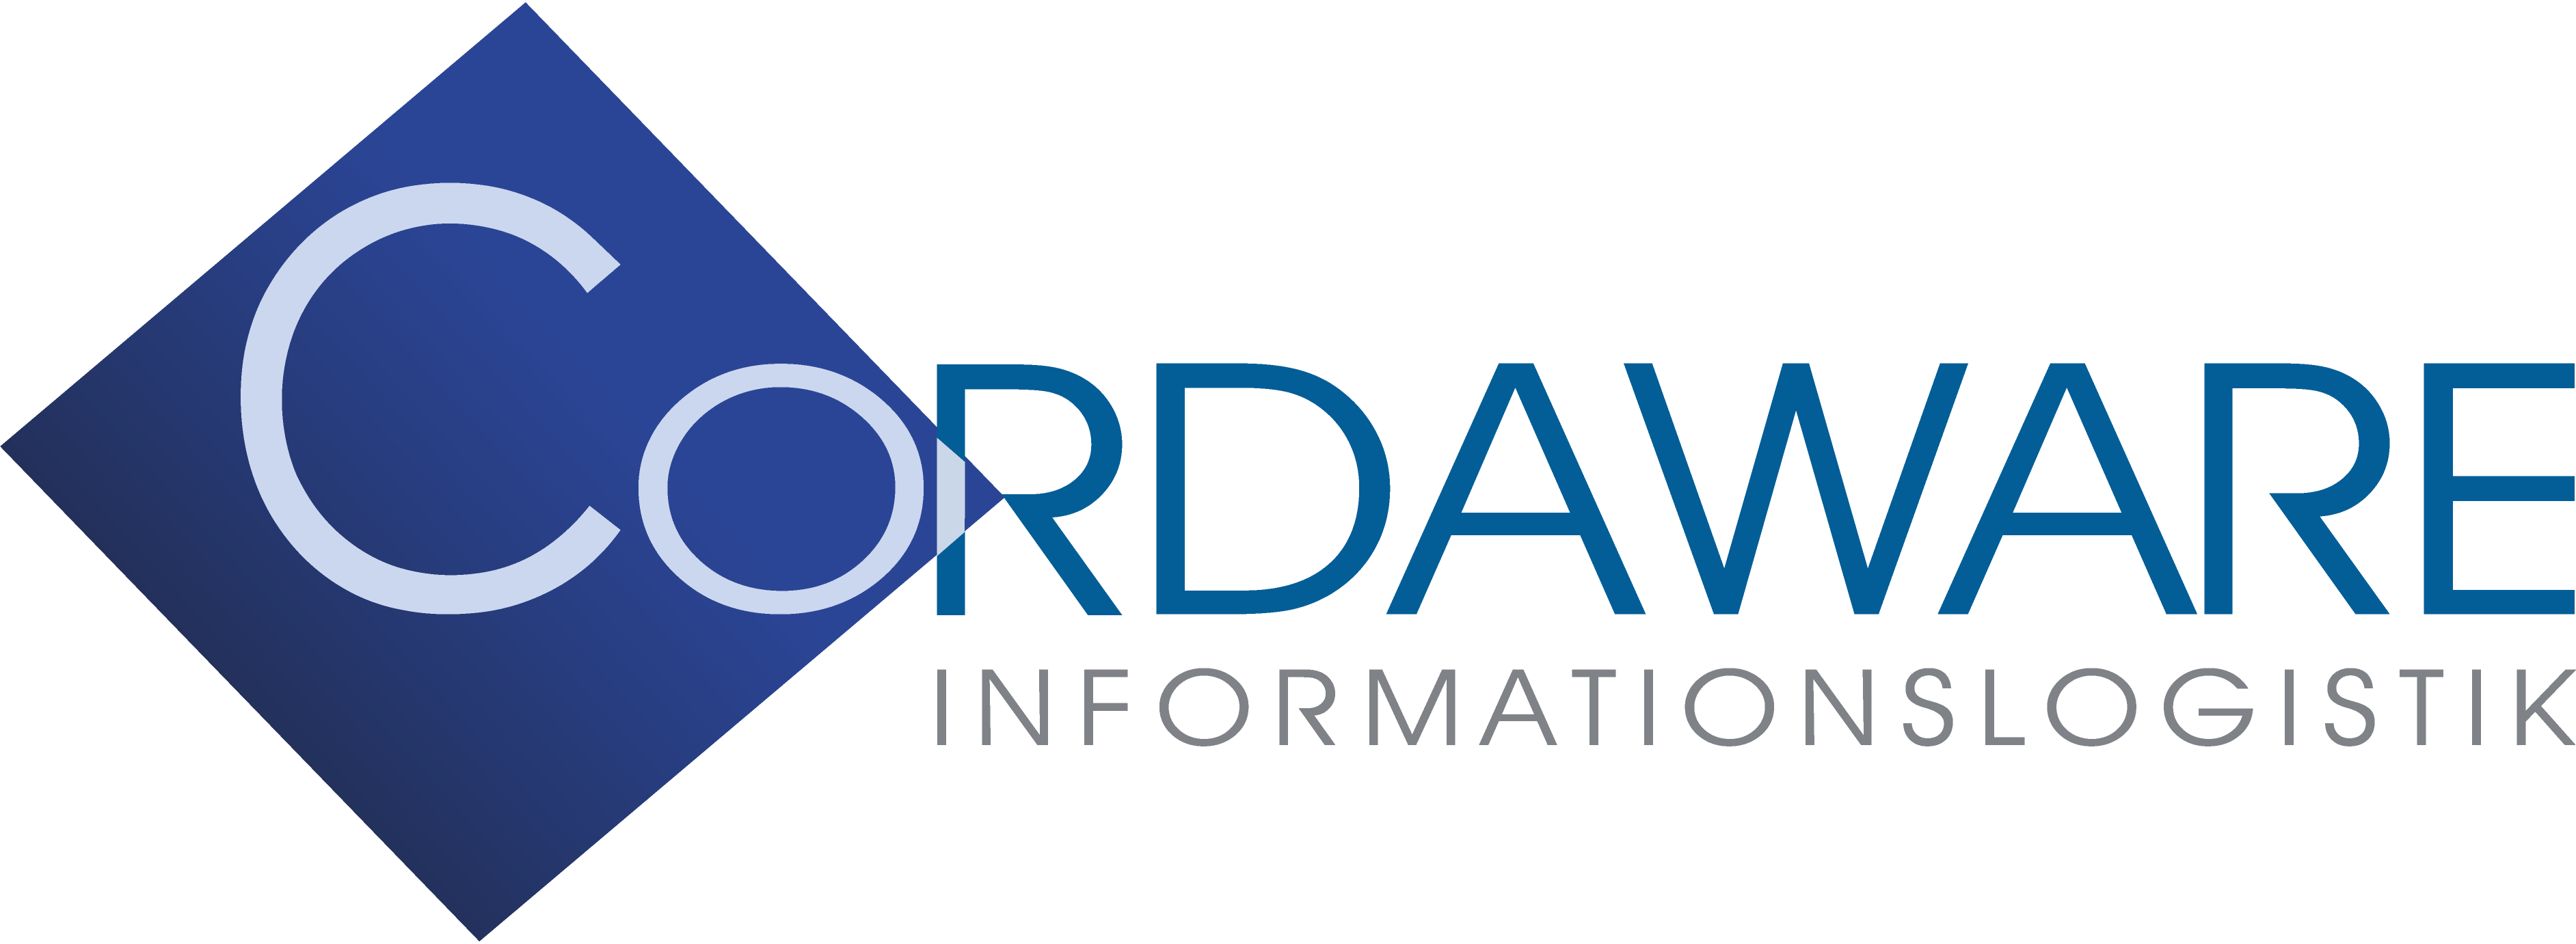 Cordaware GmbH Informationslogistik logo